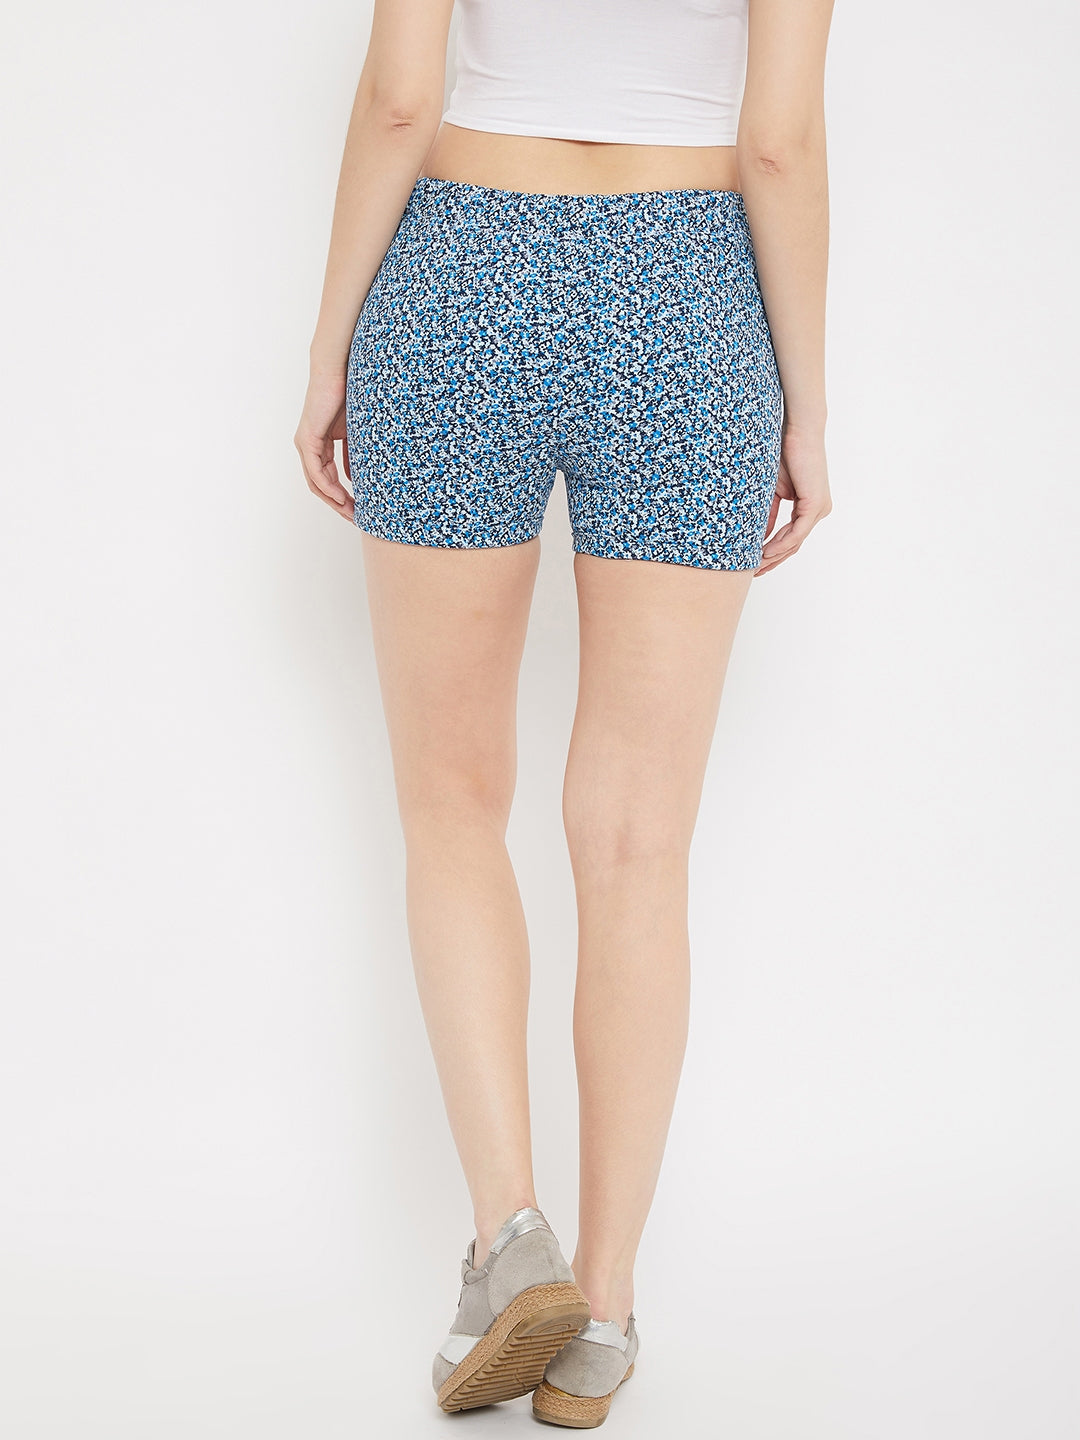 Blue Printed Shorts - Women Shorts